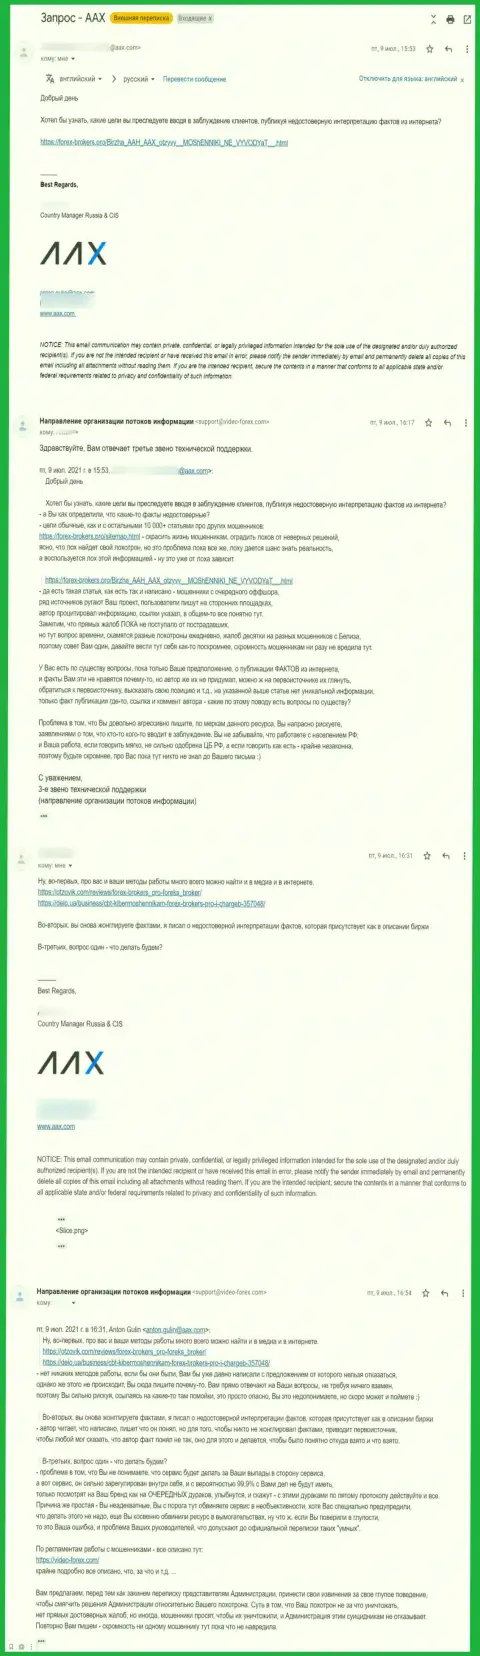 Переписка представителя мошенников AAX и 3 звена техподдержки информационного сервиса Forex-Brokers.Pro